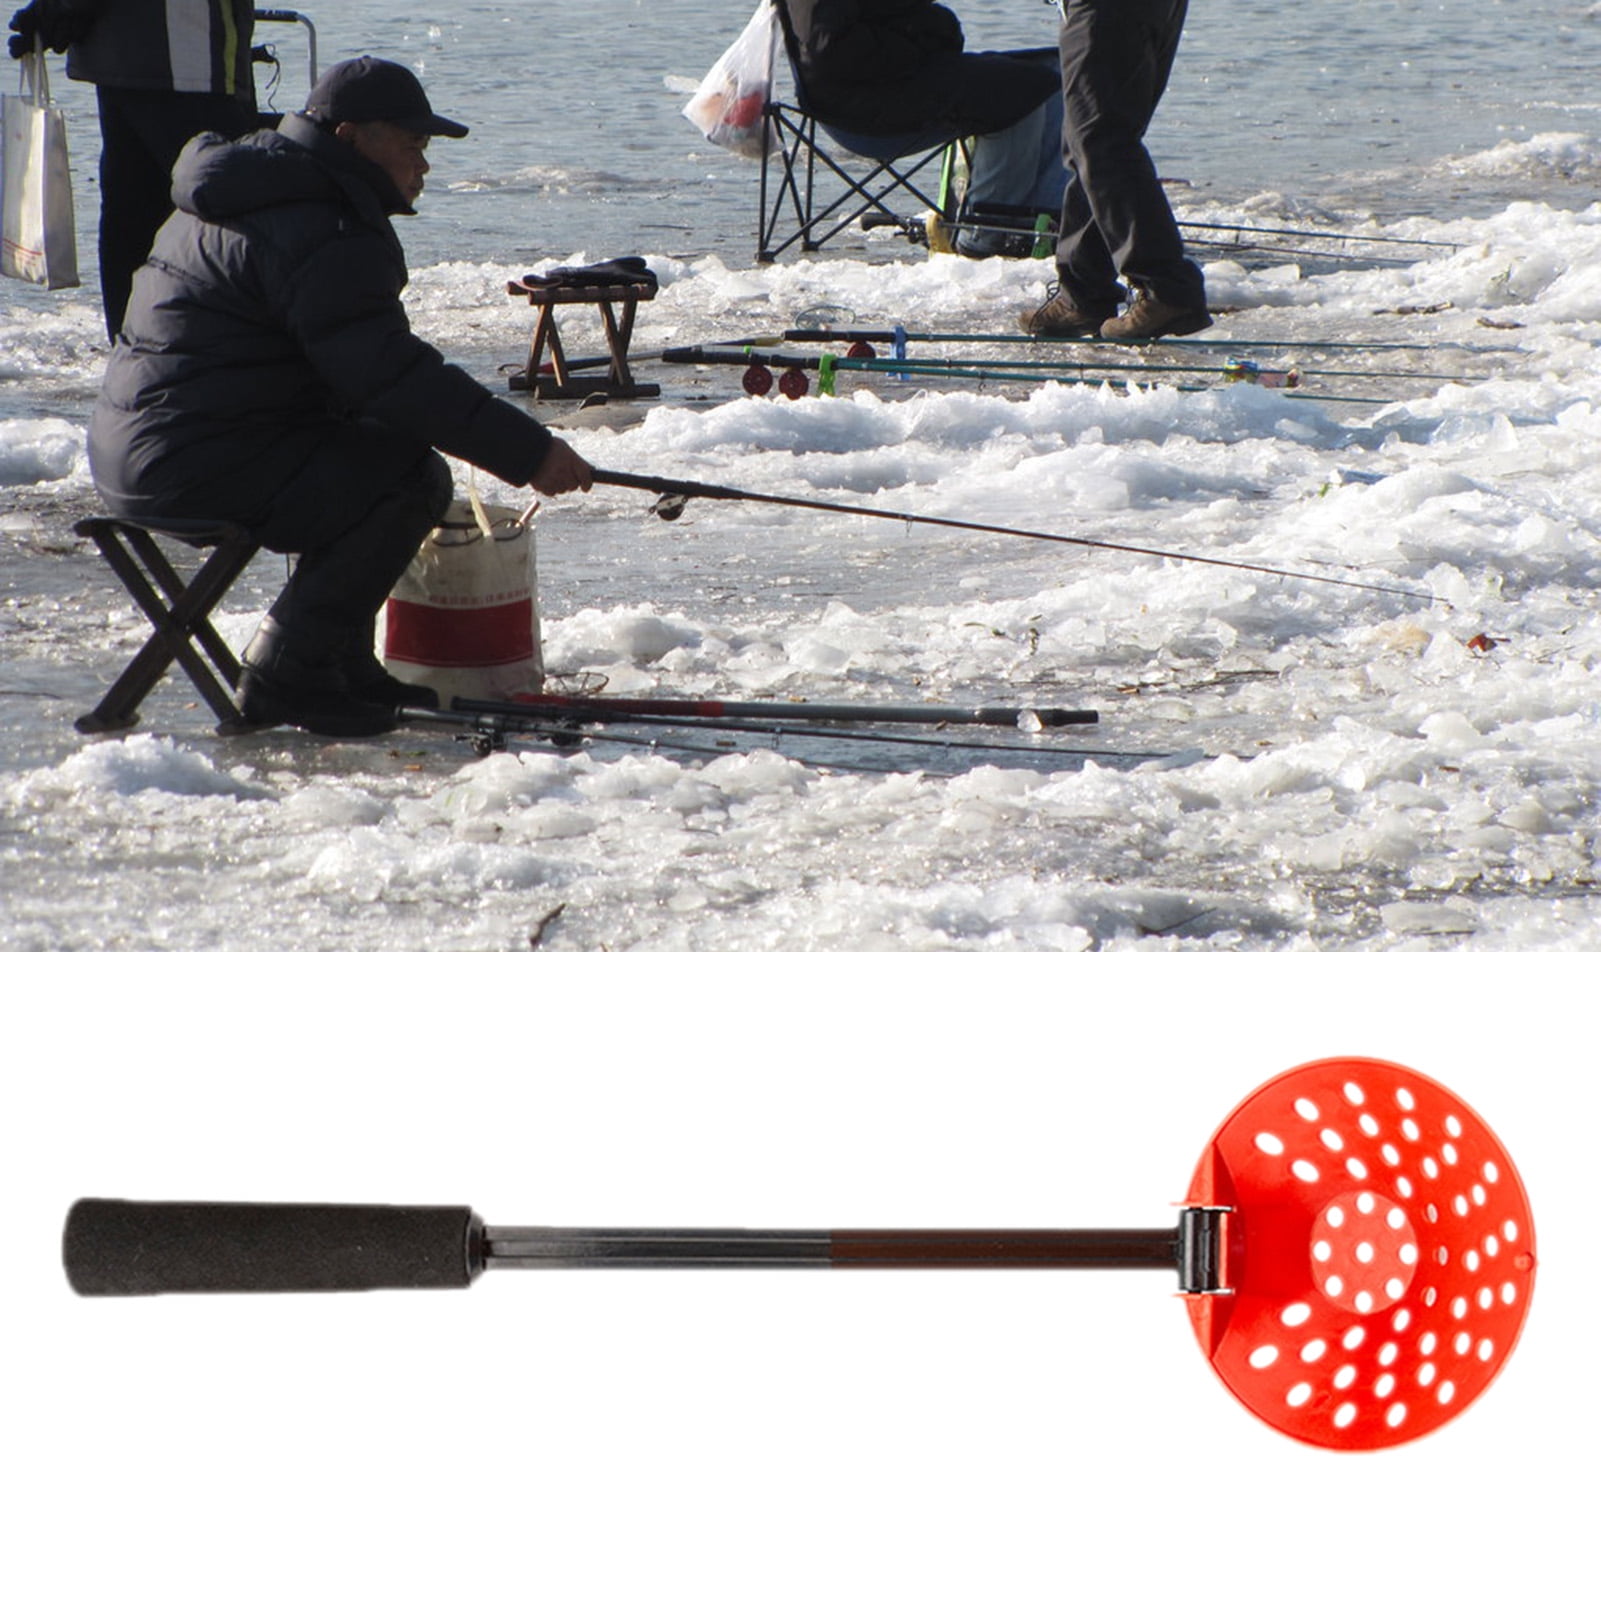 VGEBY Ice Fishing Scoop Skimmer, Plastic Foldable Detachable Winter Ice Fishing Scoop